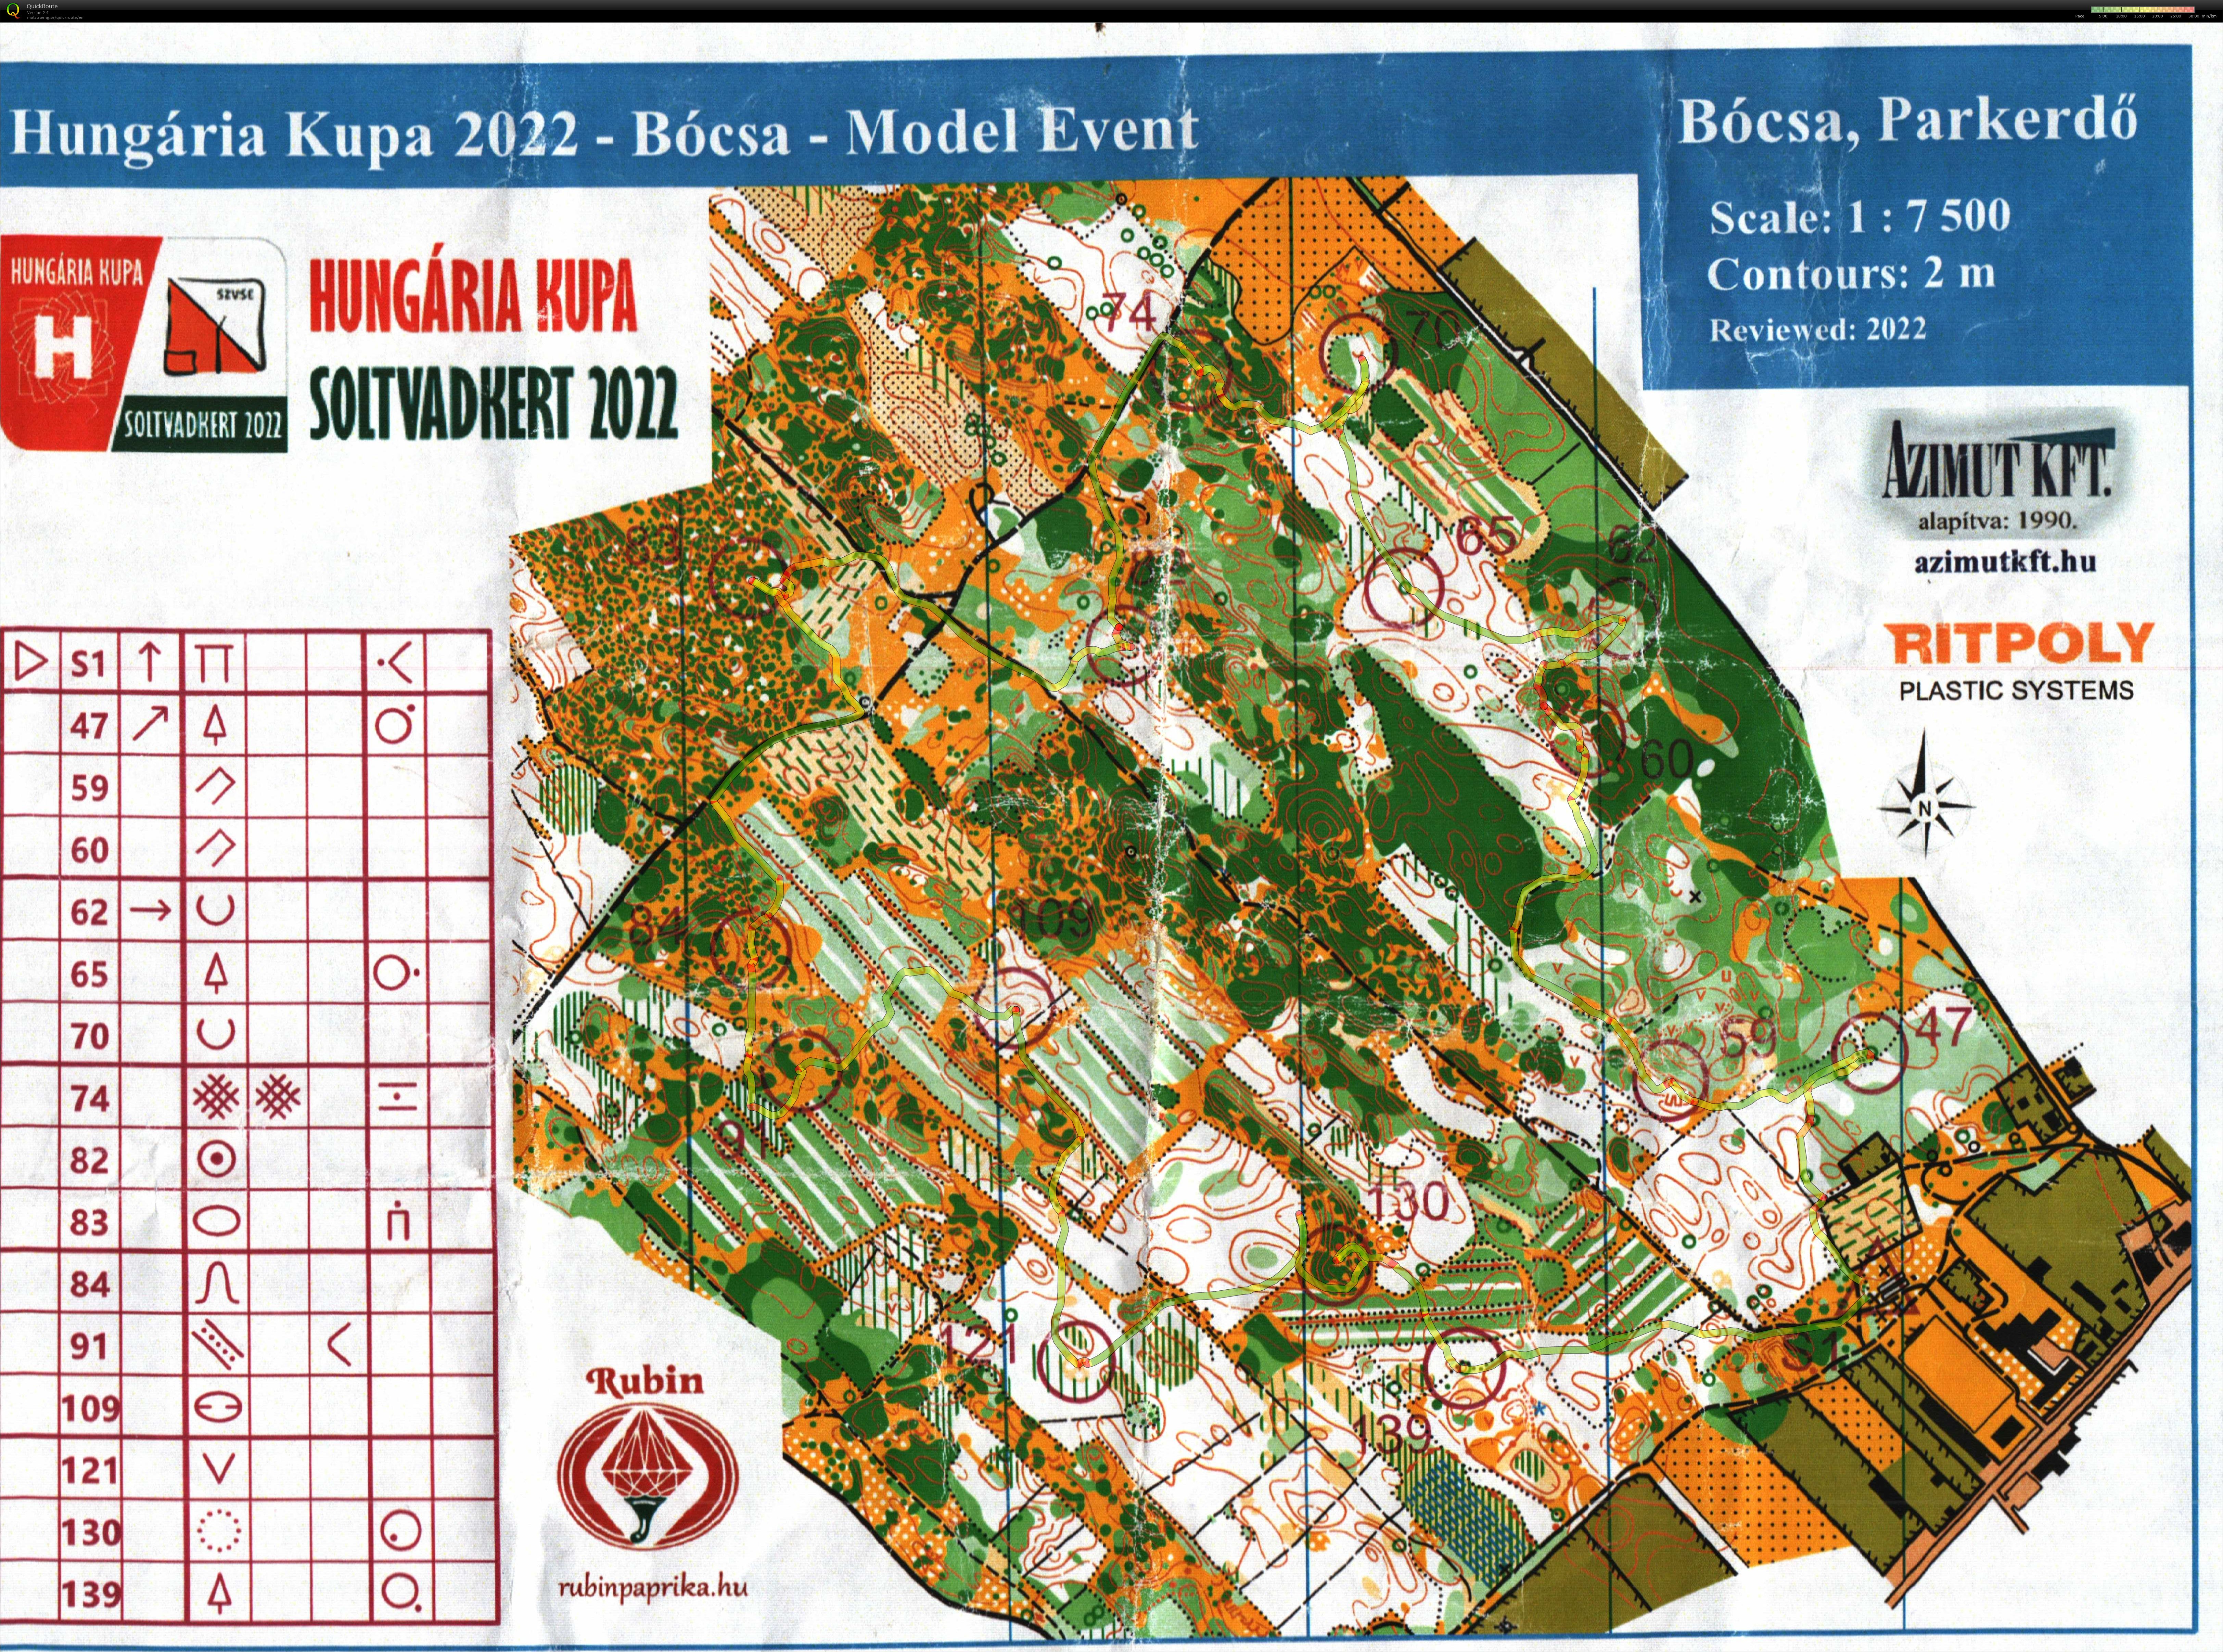 Hungaria Kupa Model Event (09/08/2022)